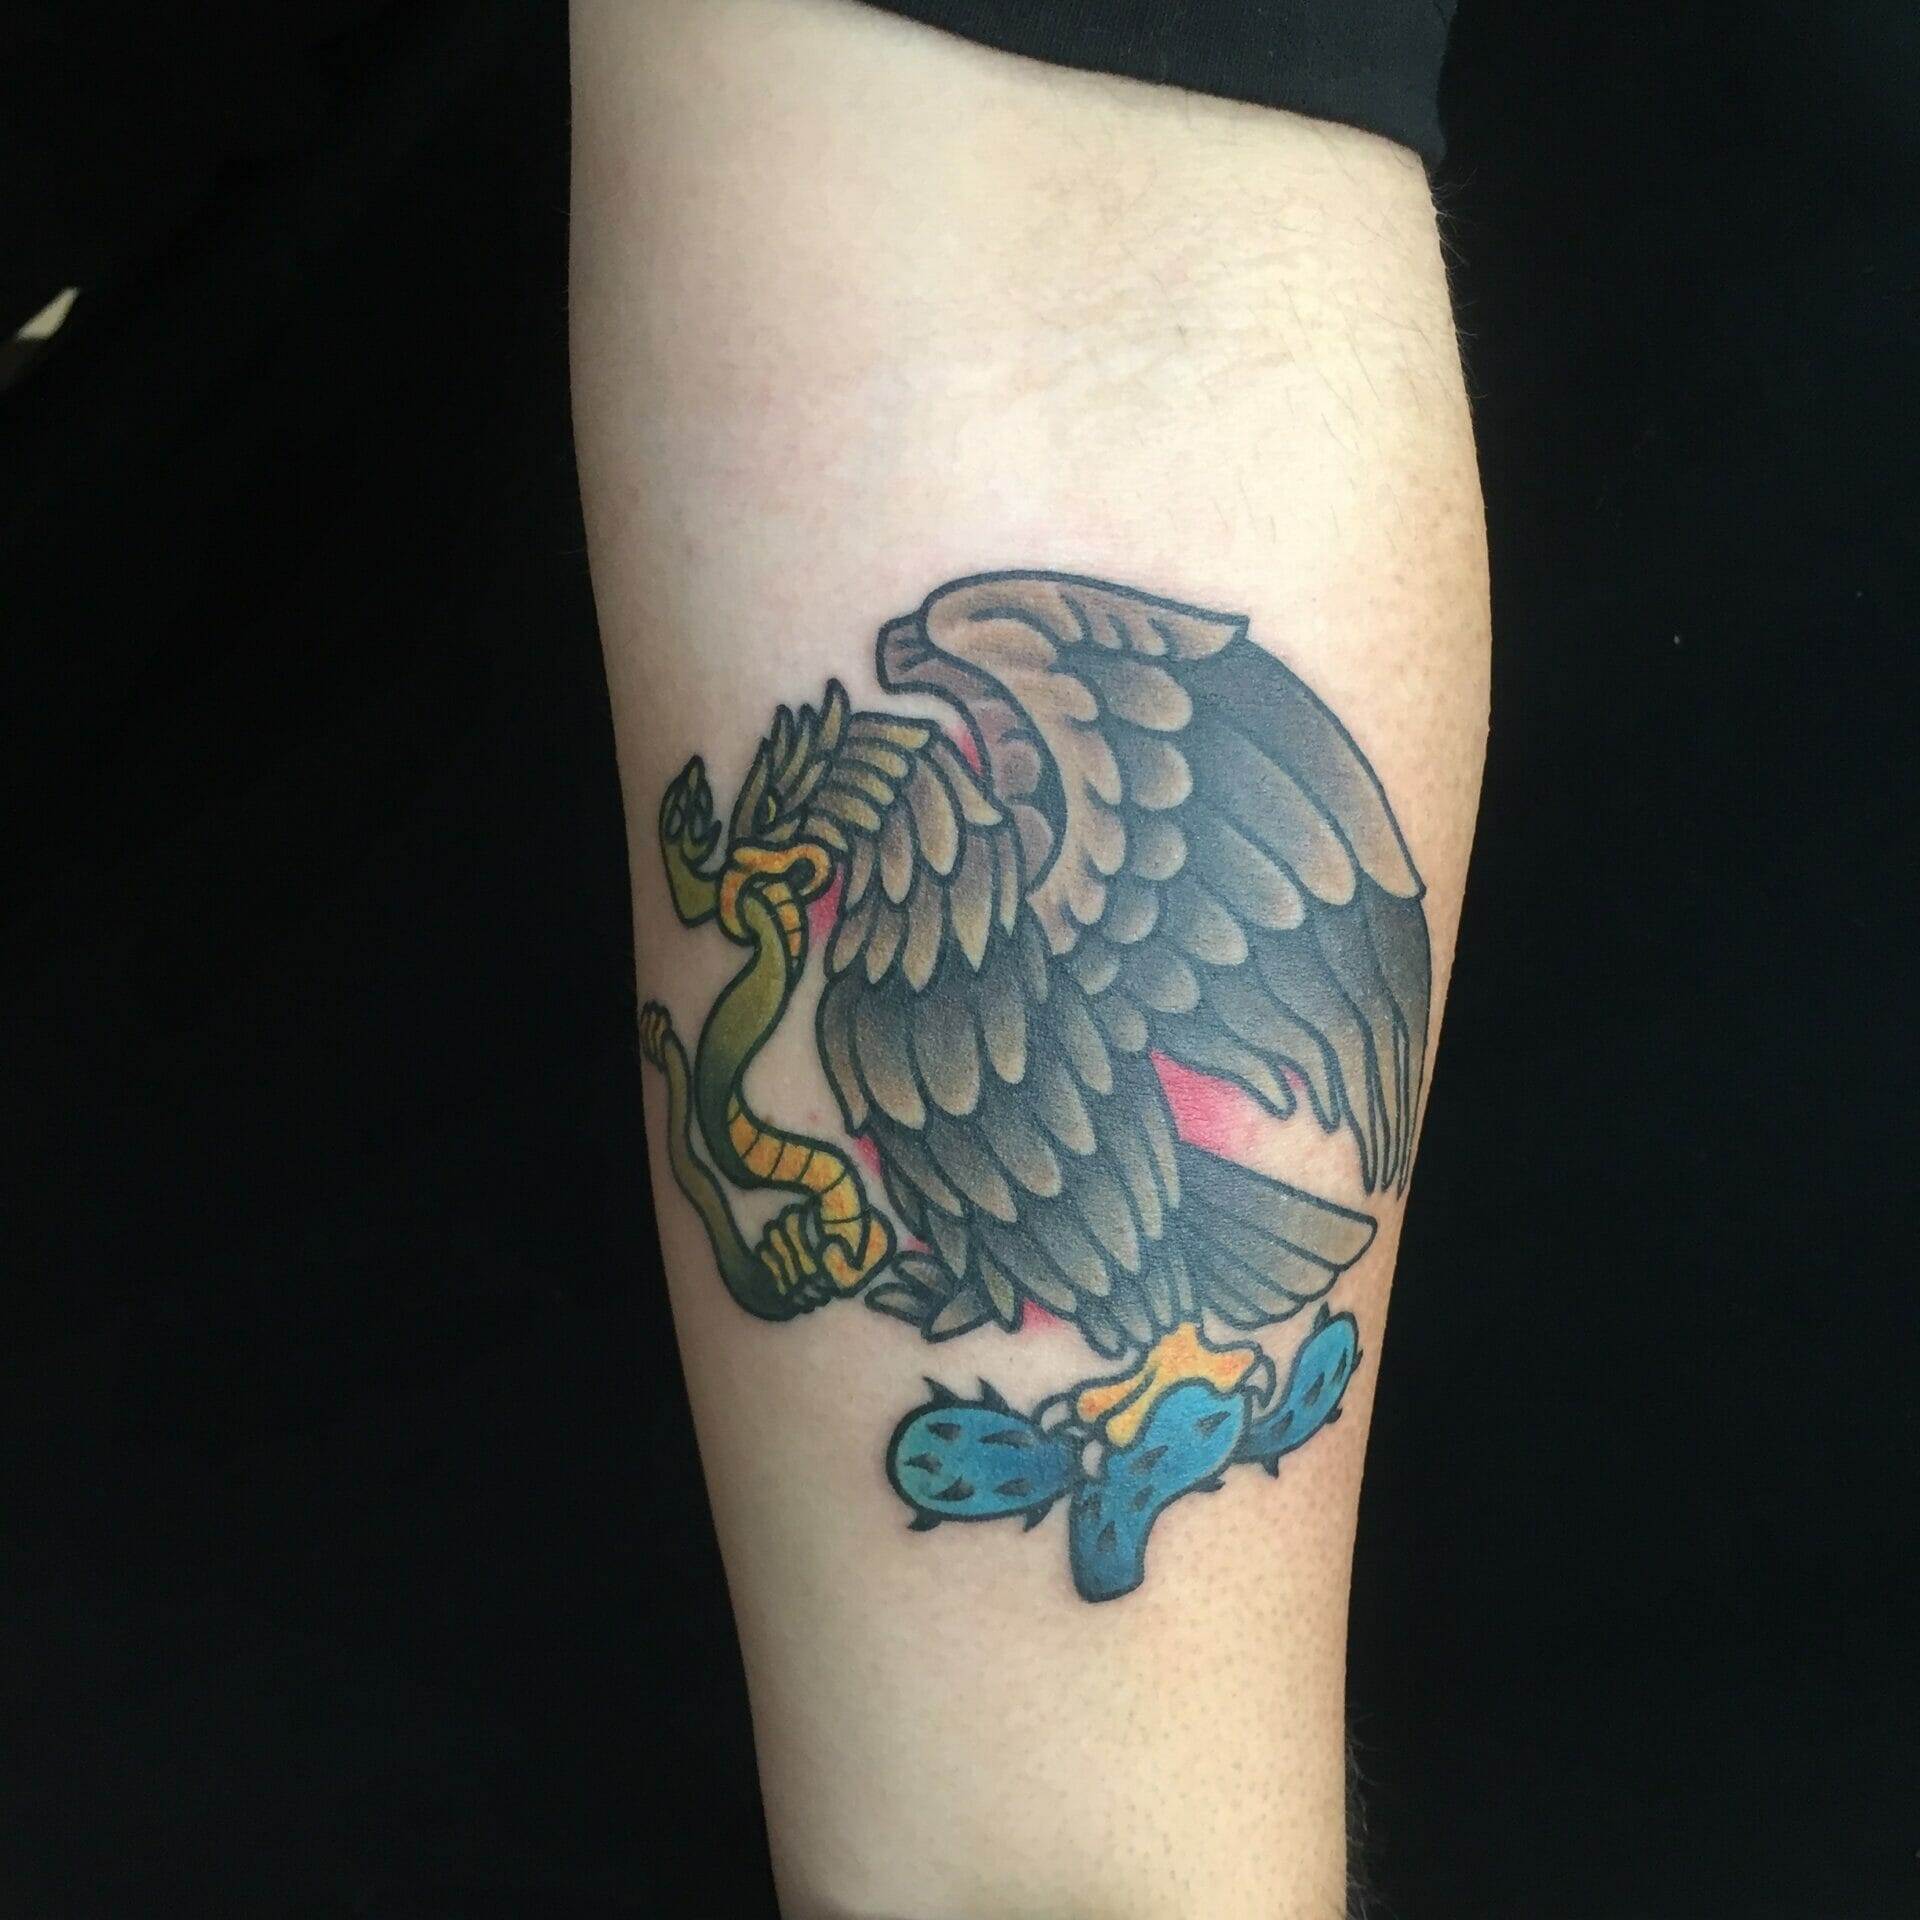 Anna G. K. Art on Tumblr: Ecuador's/pacific ocean's frigate birds soaring  and diving. His first tattoo. And heaps fun fr me #annaktattoo #frigate  #nature...